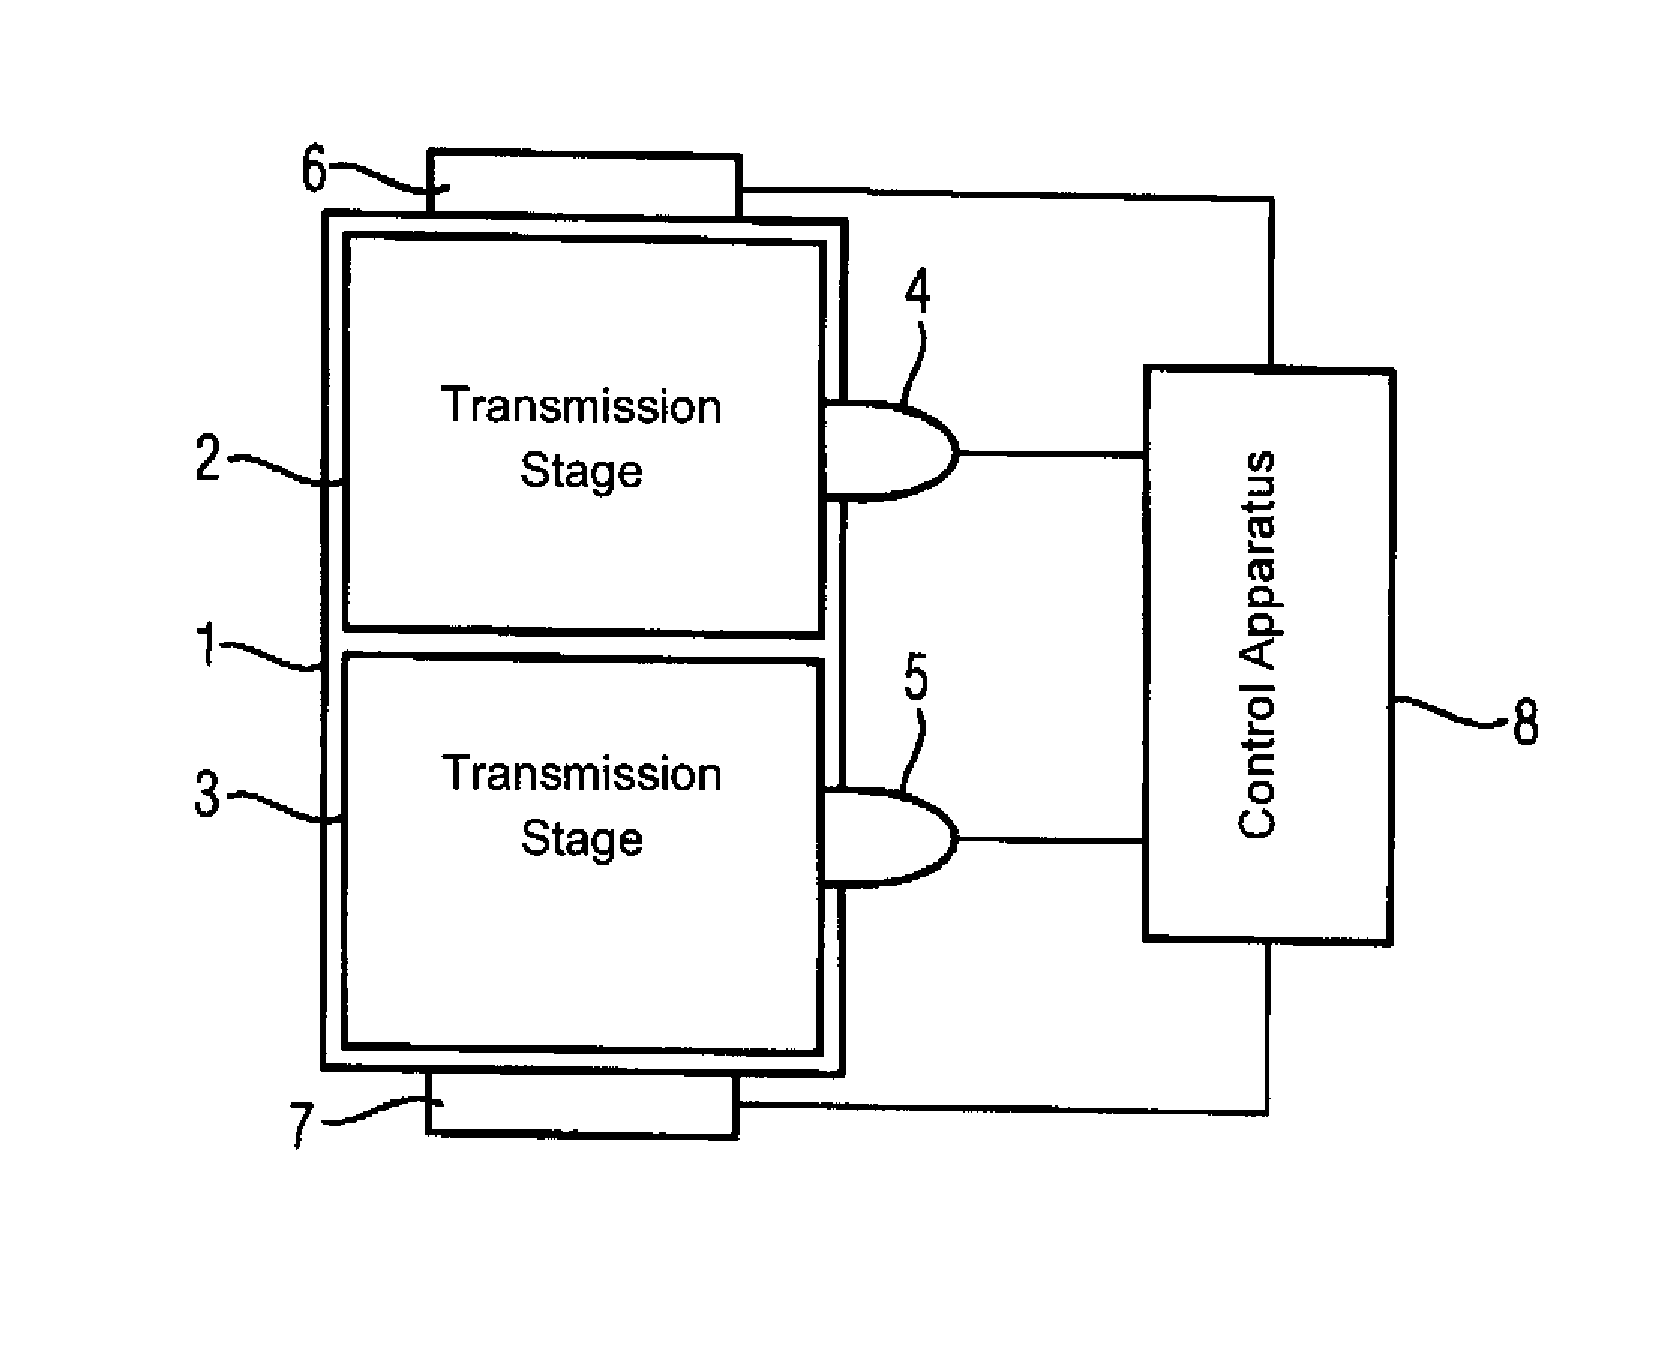 Method for identifying damage on transmissions